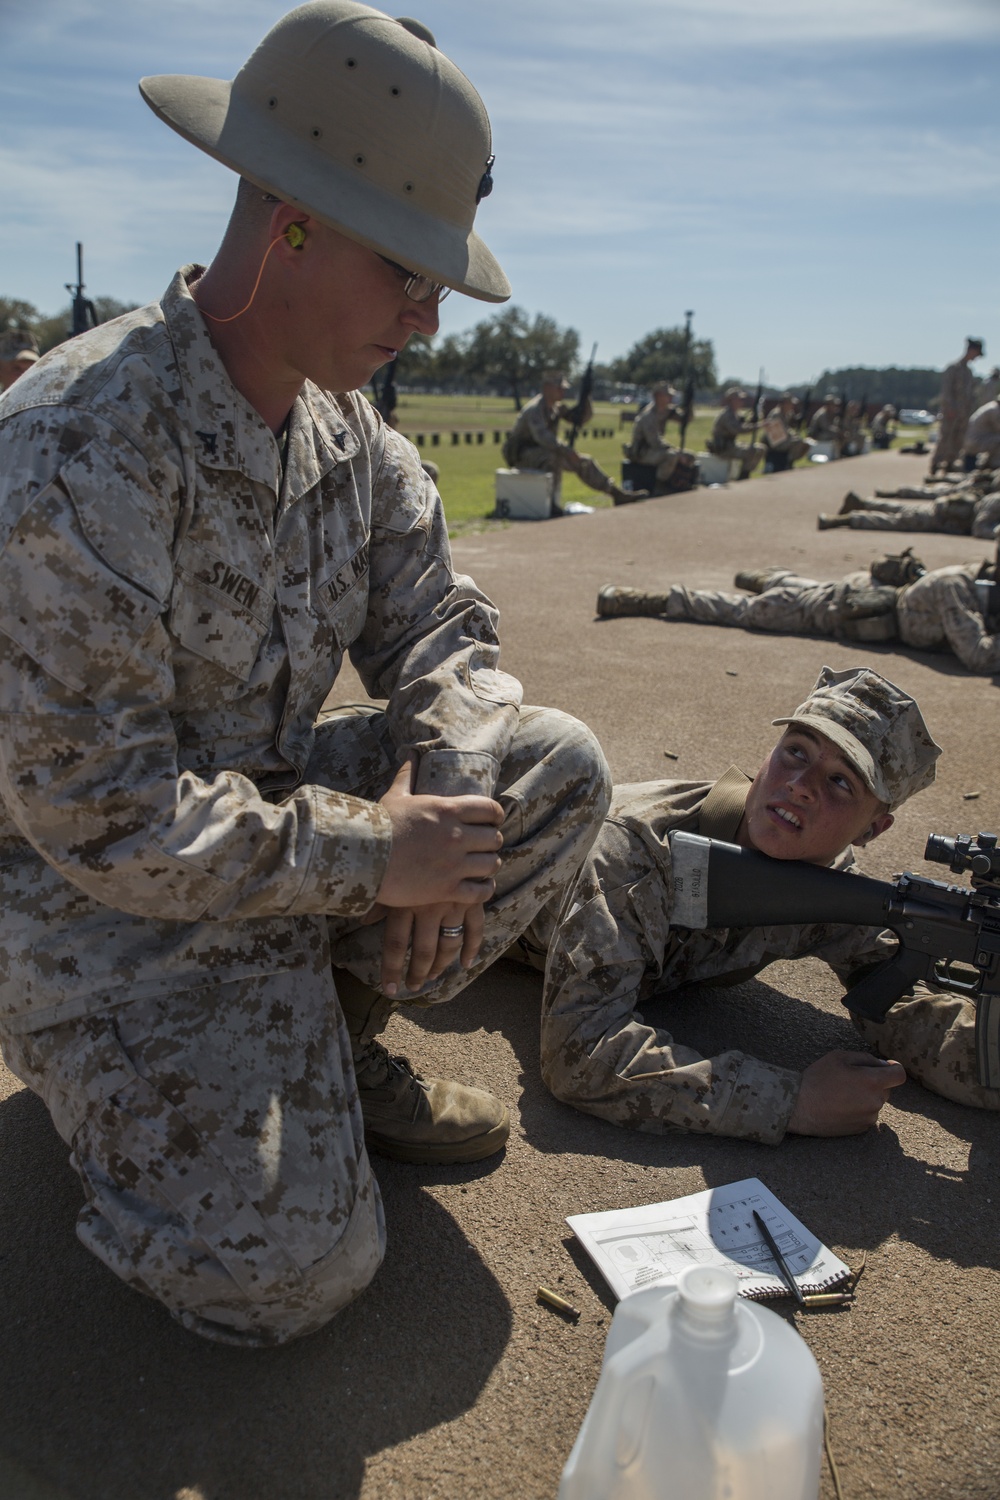 Marine recruits shoot for expert status on Parris Island rifle range